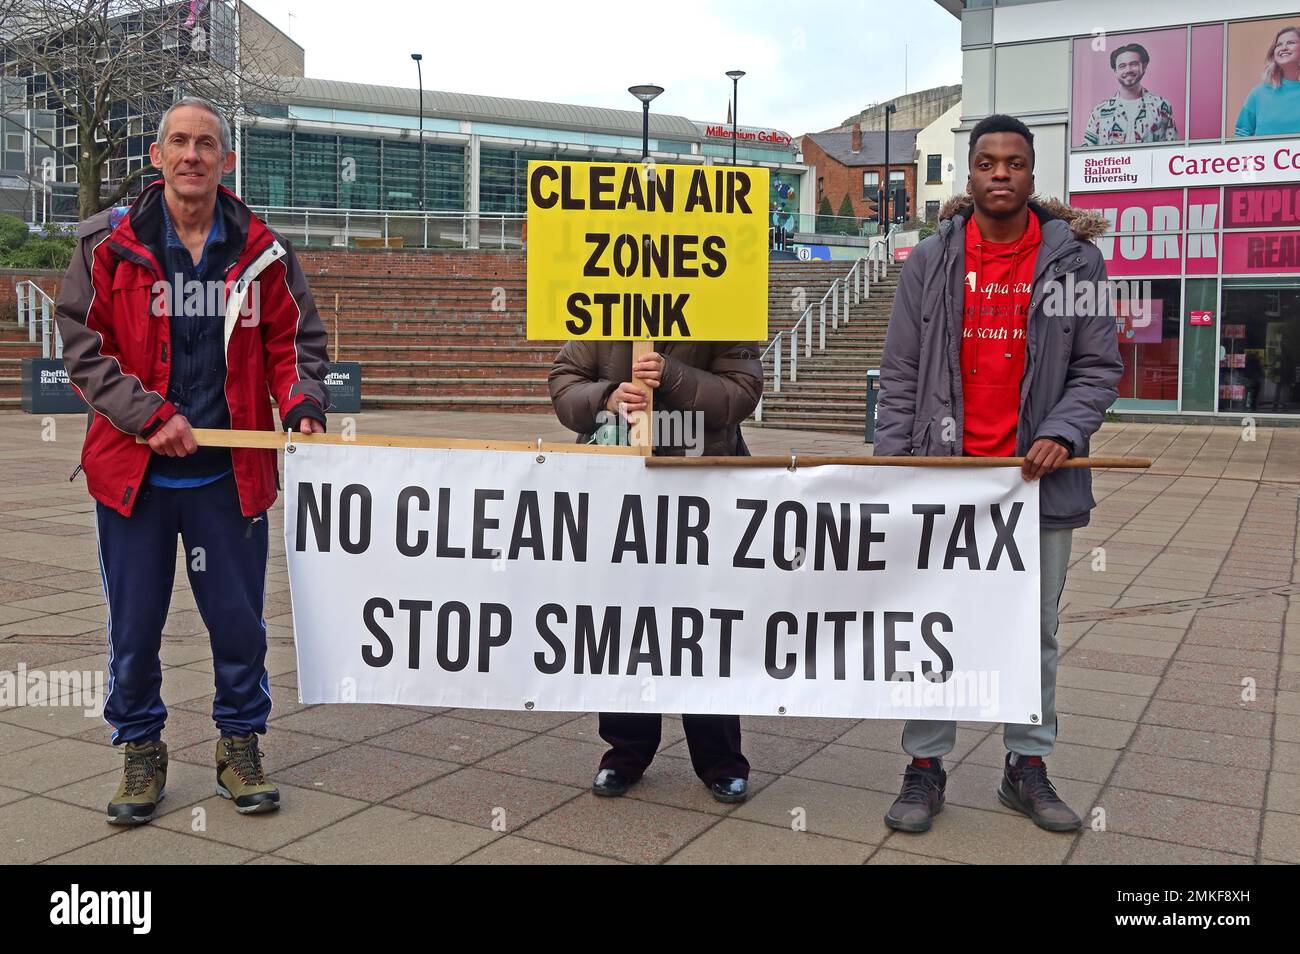 Sheffield Clean Air zone, dal 27 febbraio 2023 - Clean Air Zones Stink Sign - dimostranti Nessuna tassa sulla Clean Air zone - Stop Smart Cities - CAZ Foto Stock